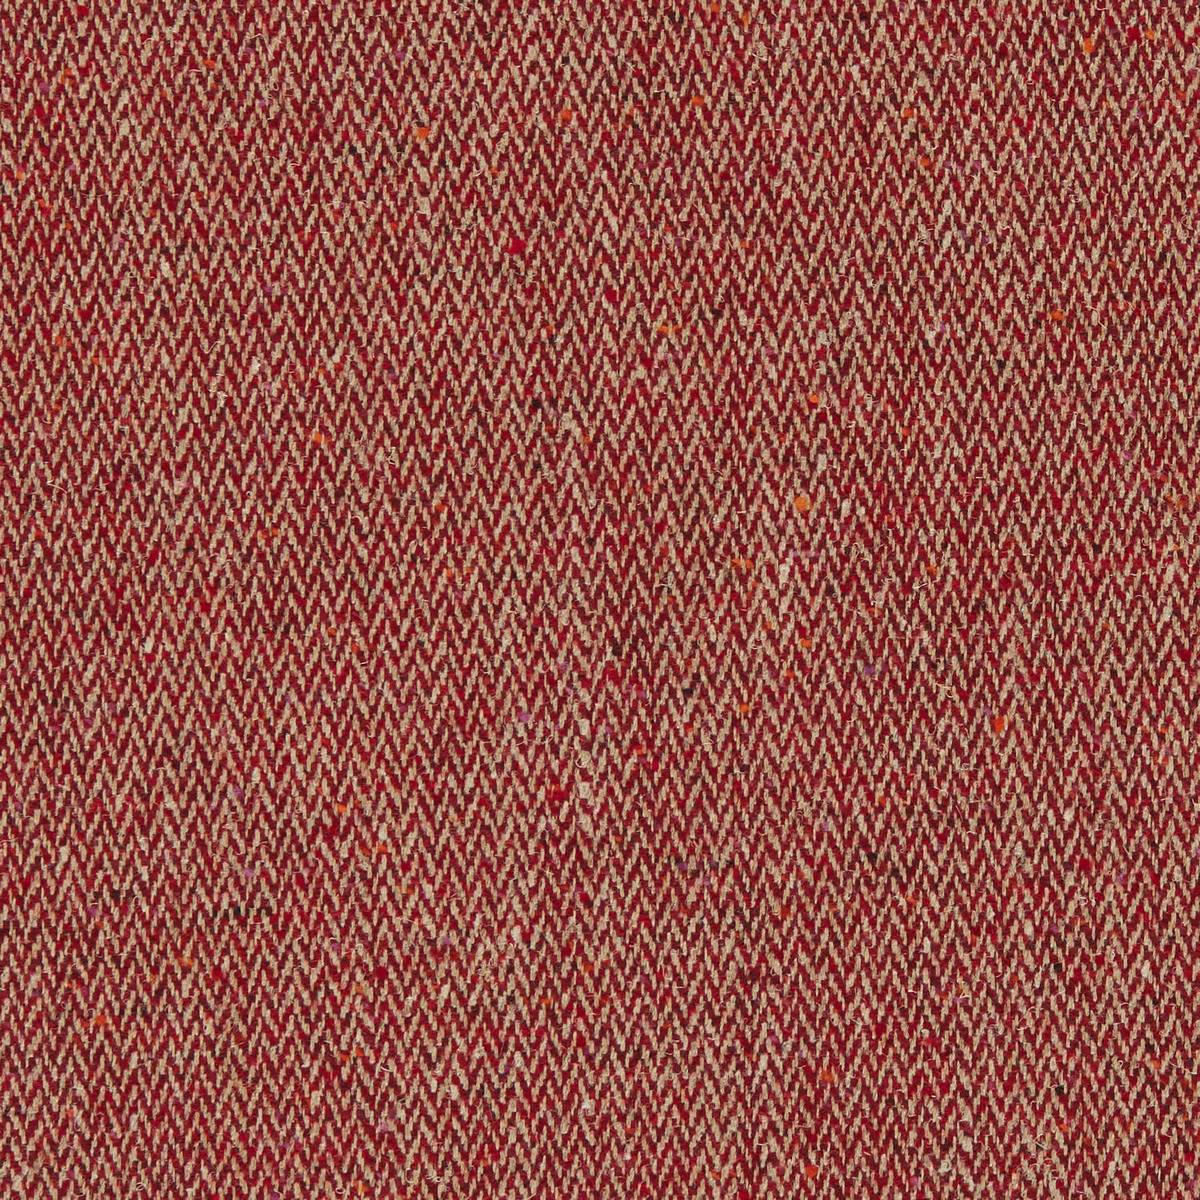 Brunswick Carmine Fabric by William Morris & Co.